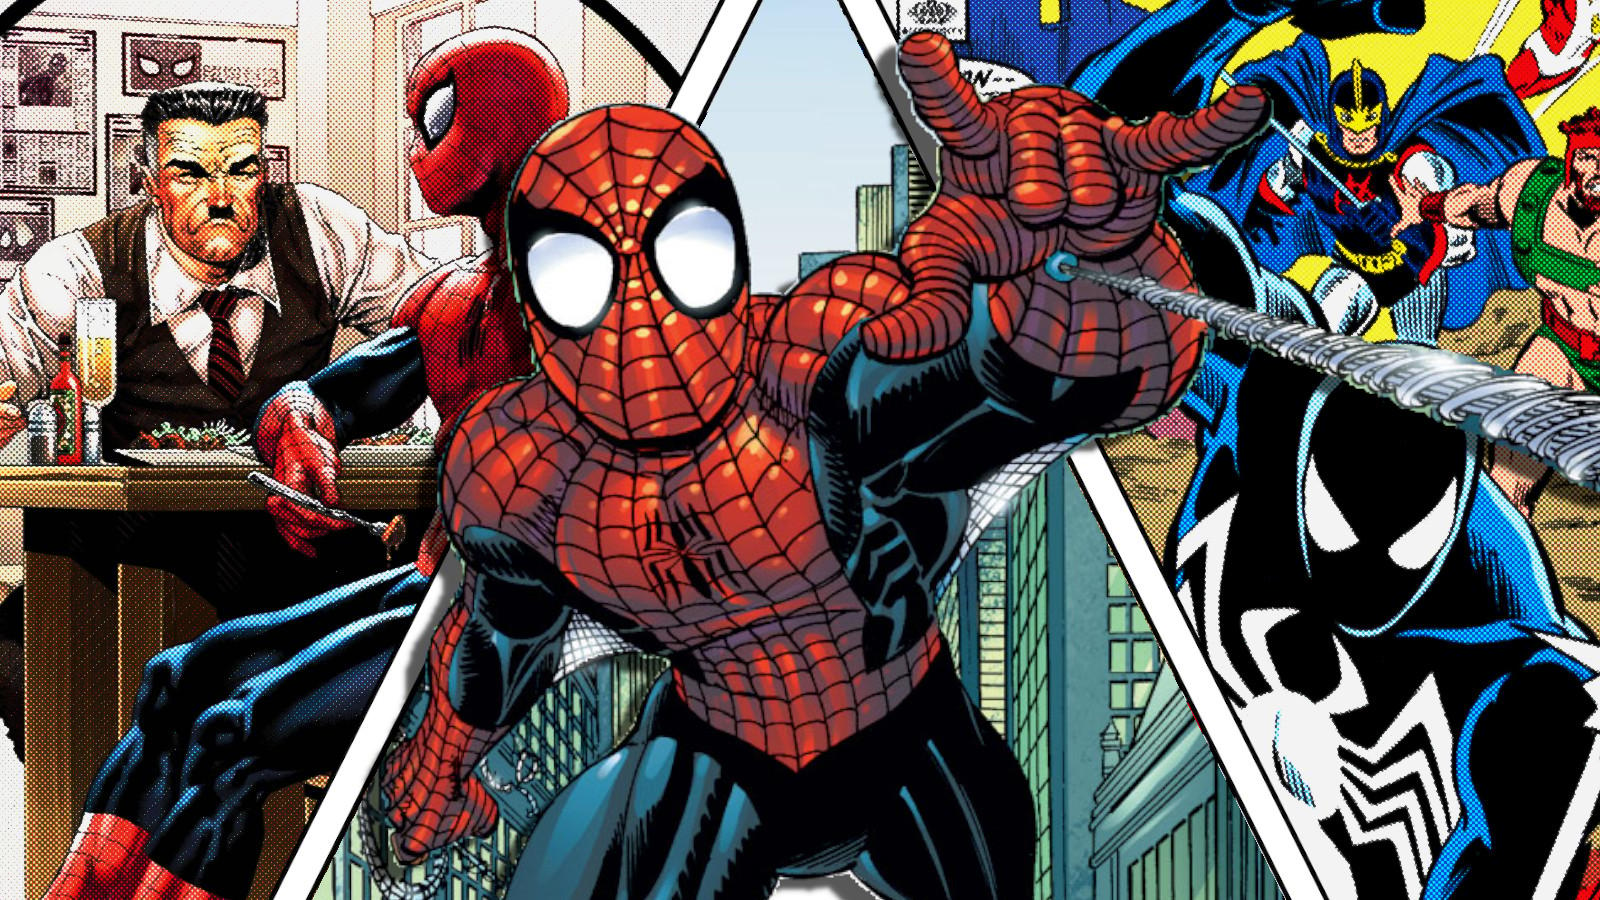 Spider-Man across Marvel Comics